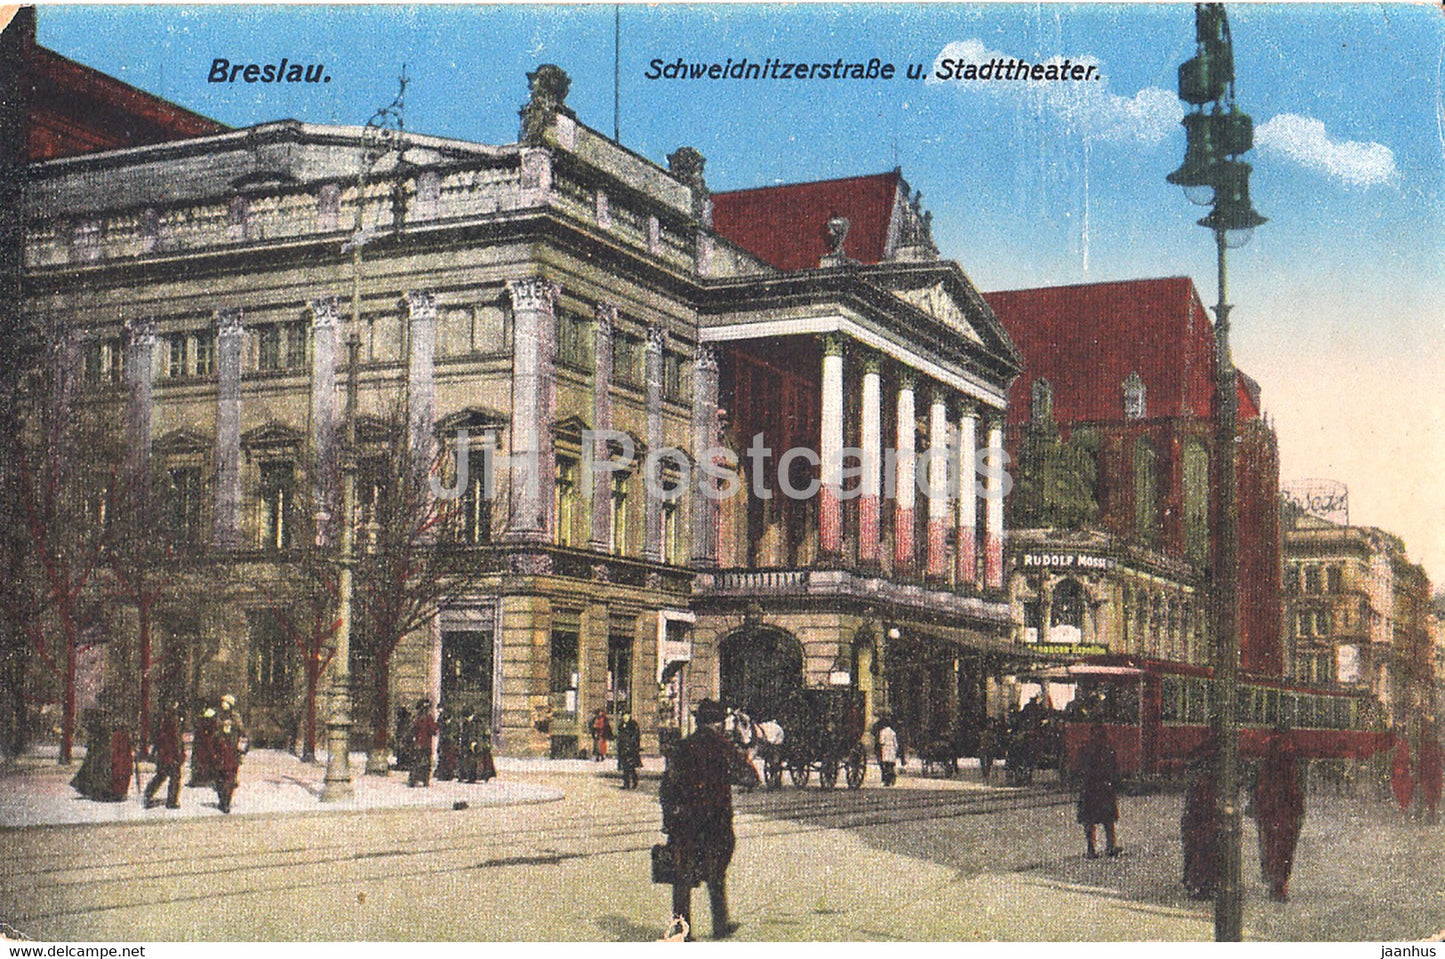 Breslau - Wroclaw - Schweidnitzerstrasse u Stadttheater - theatre - Feldpost - 14 - old postcard - Poland - used - JH Postcards